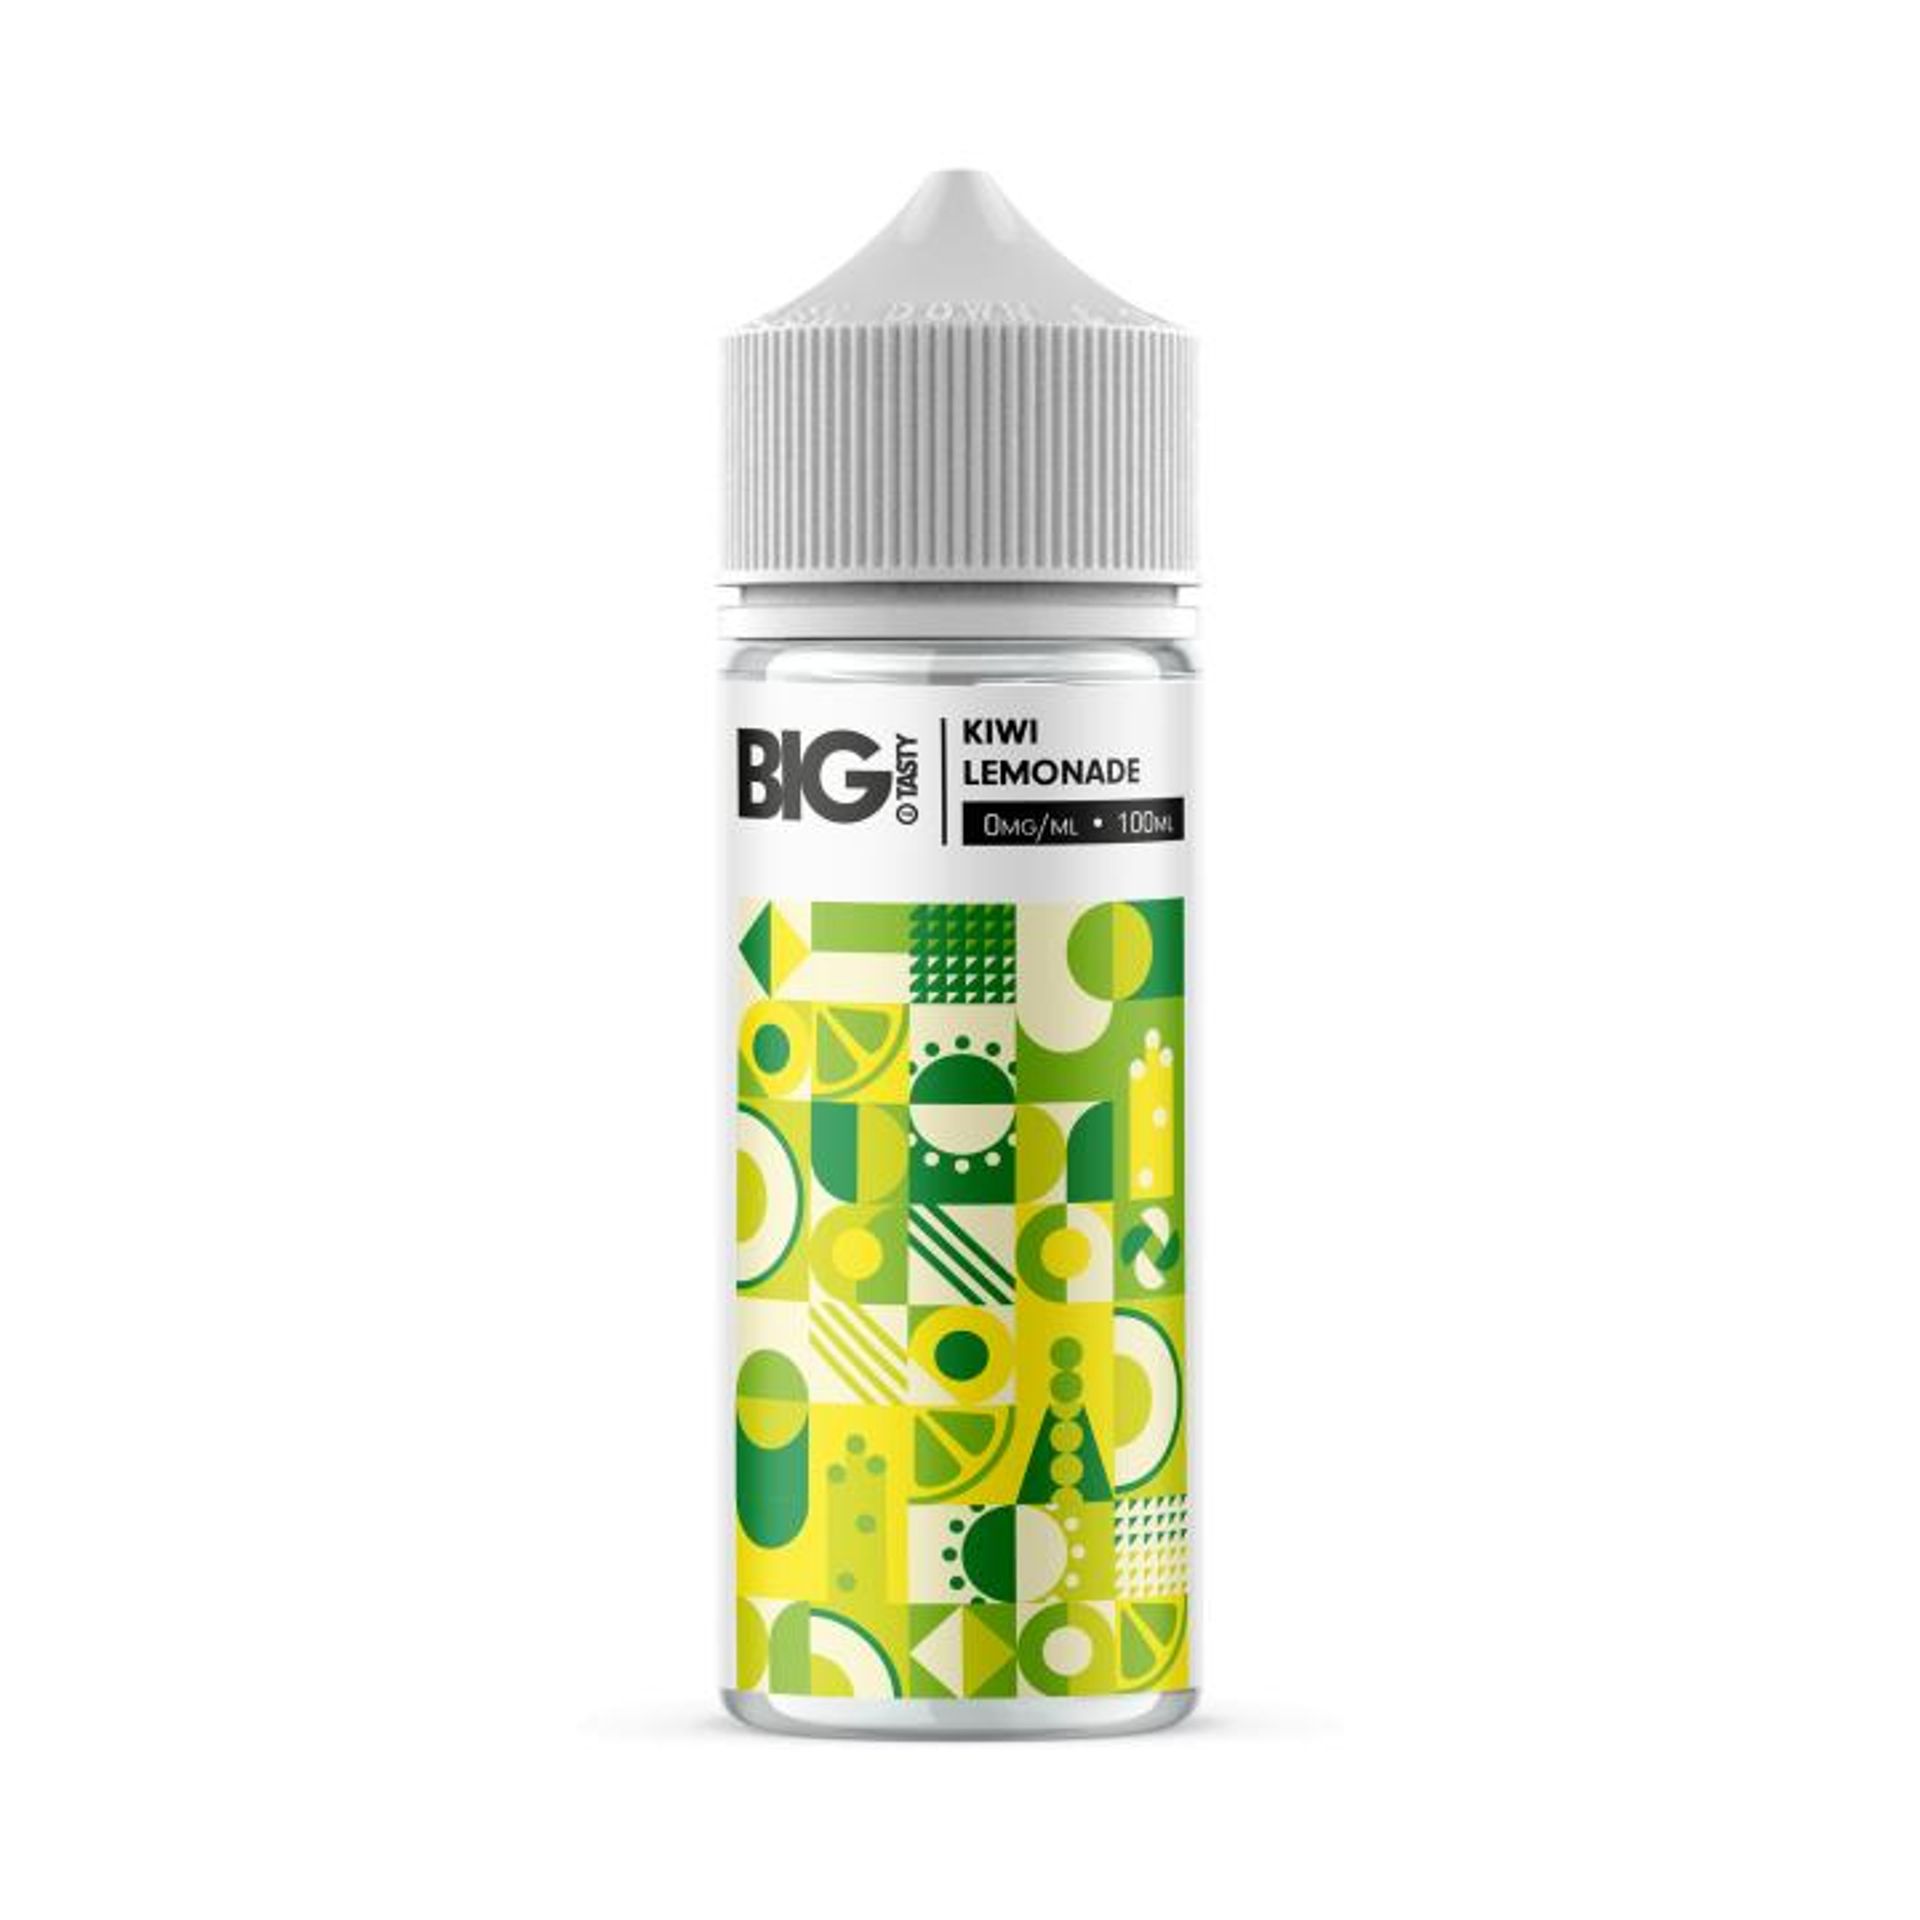 Image of Kiwi Lemonade by Big Tasty